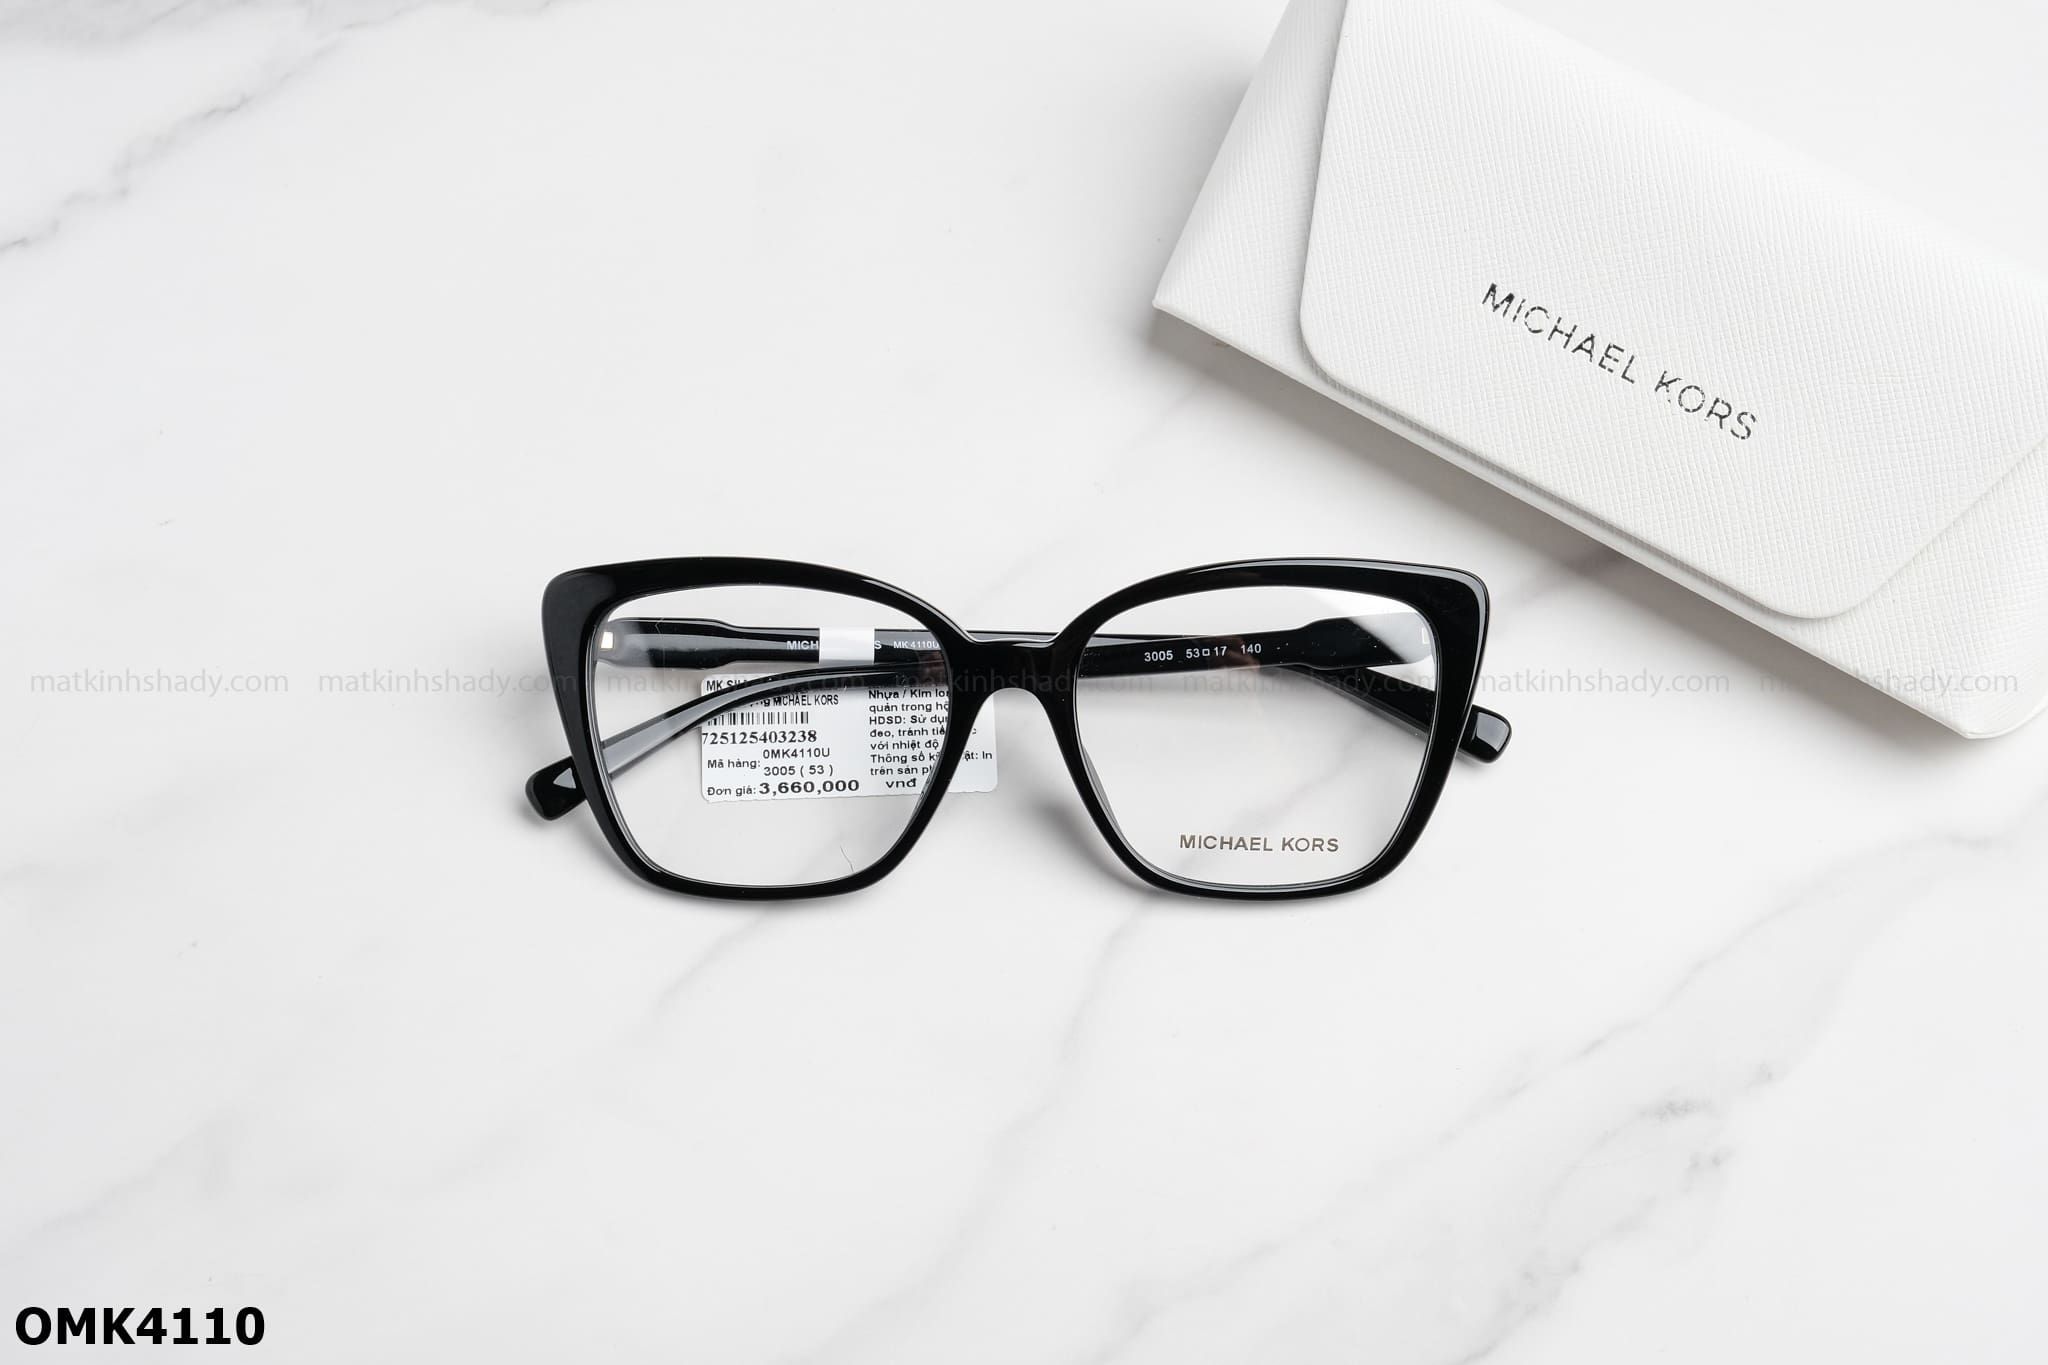  Michael Kors Eyewear - Glasses - OMK4110 